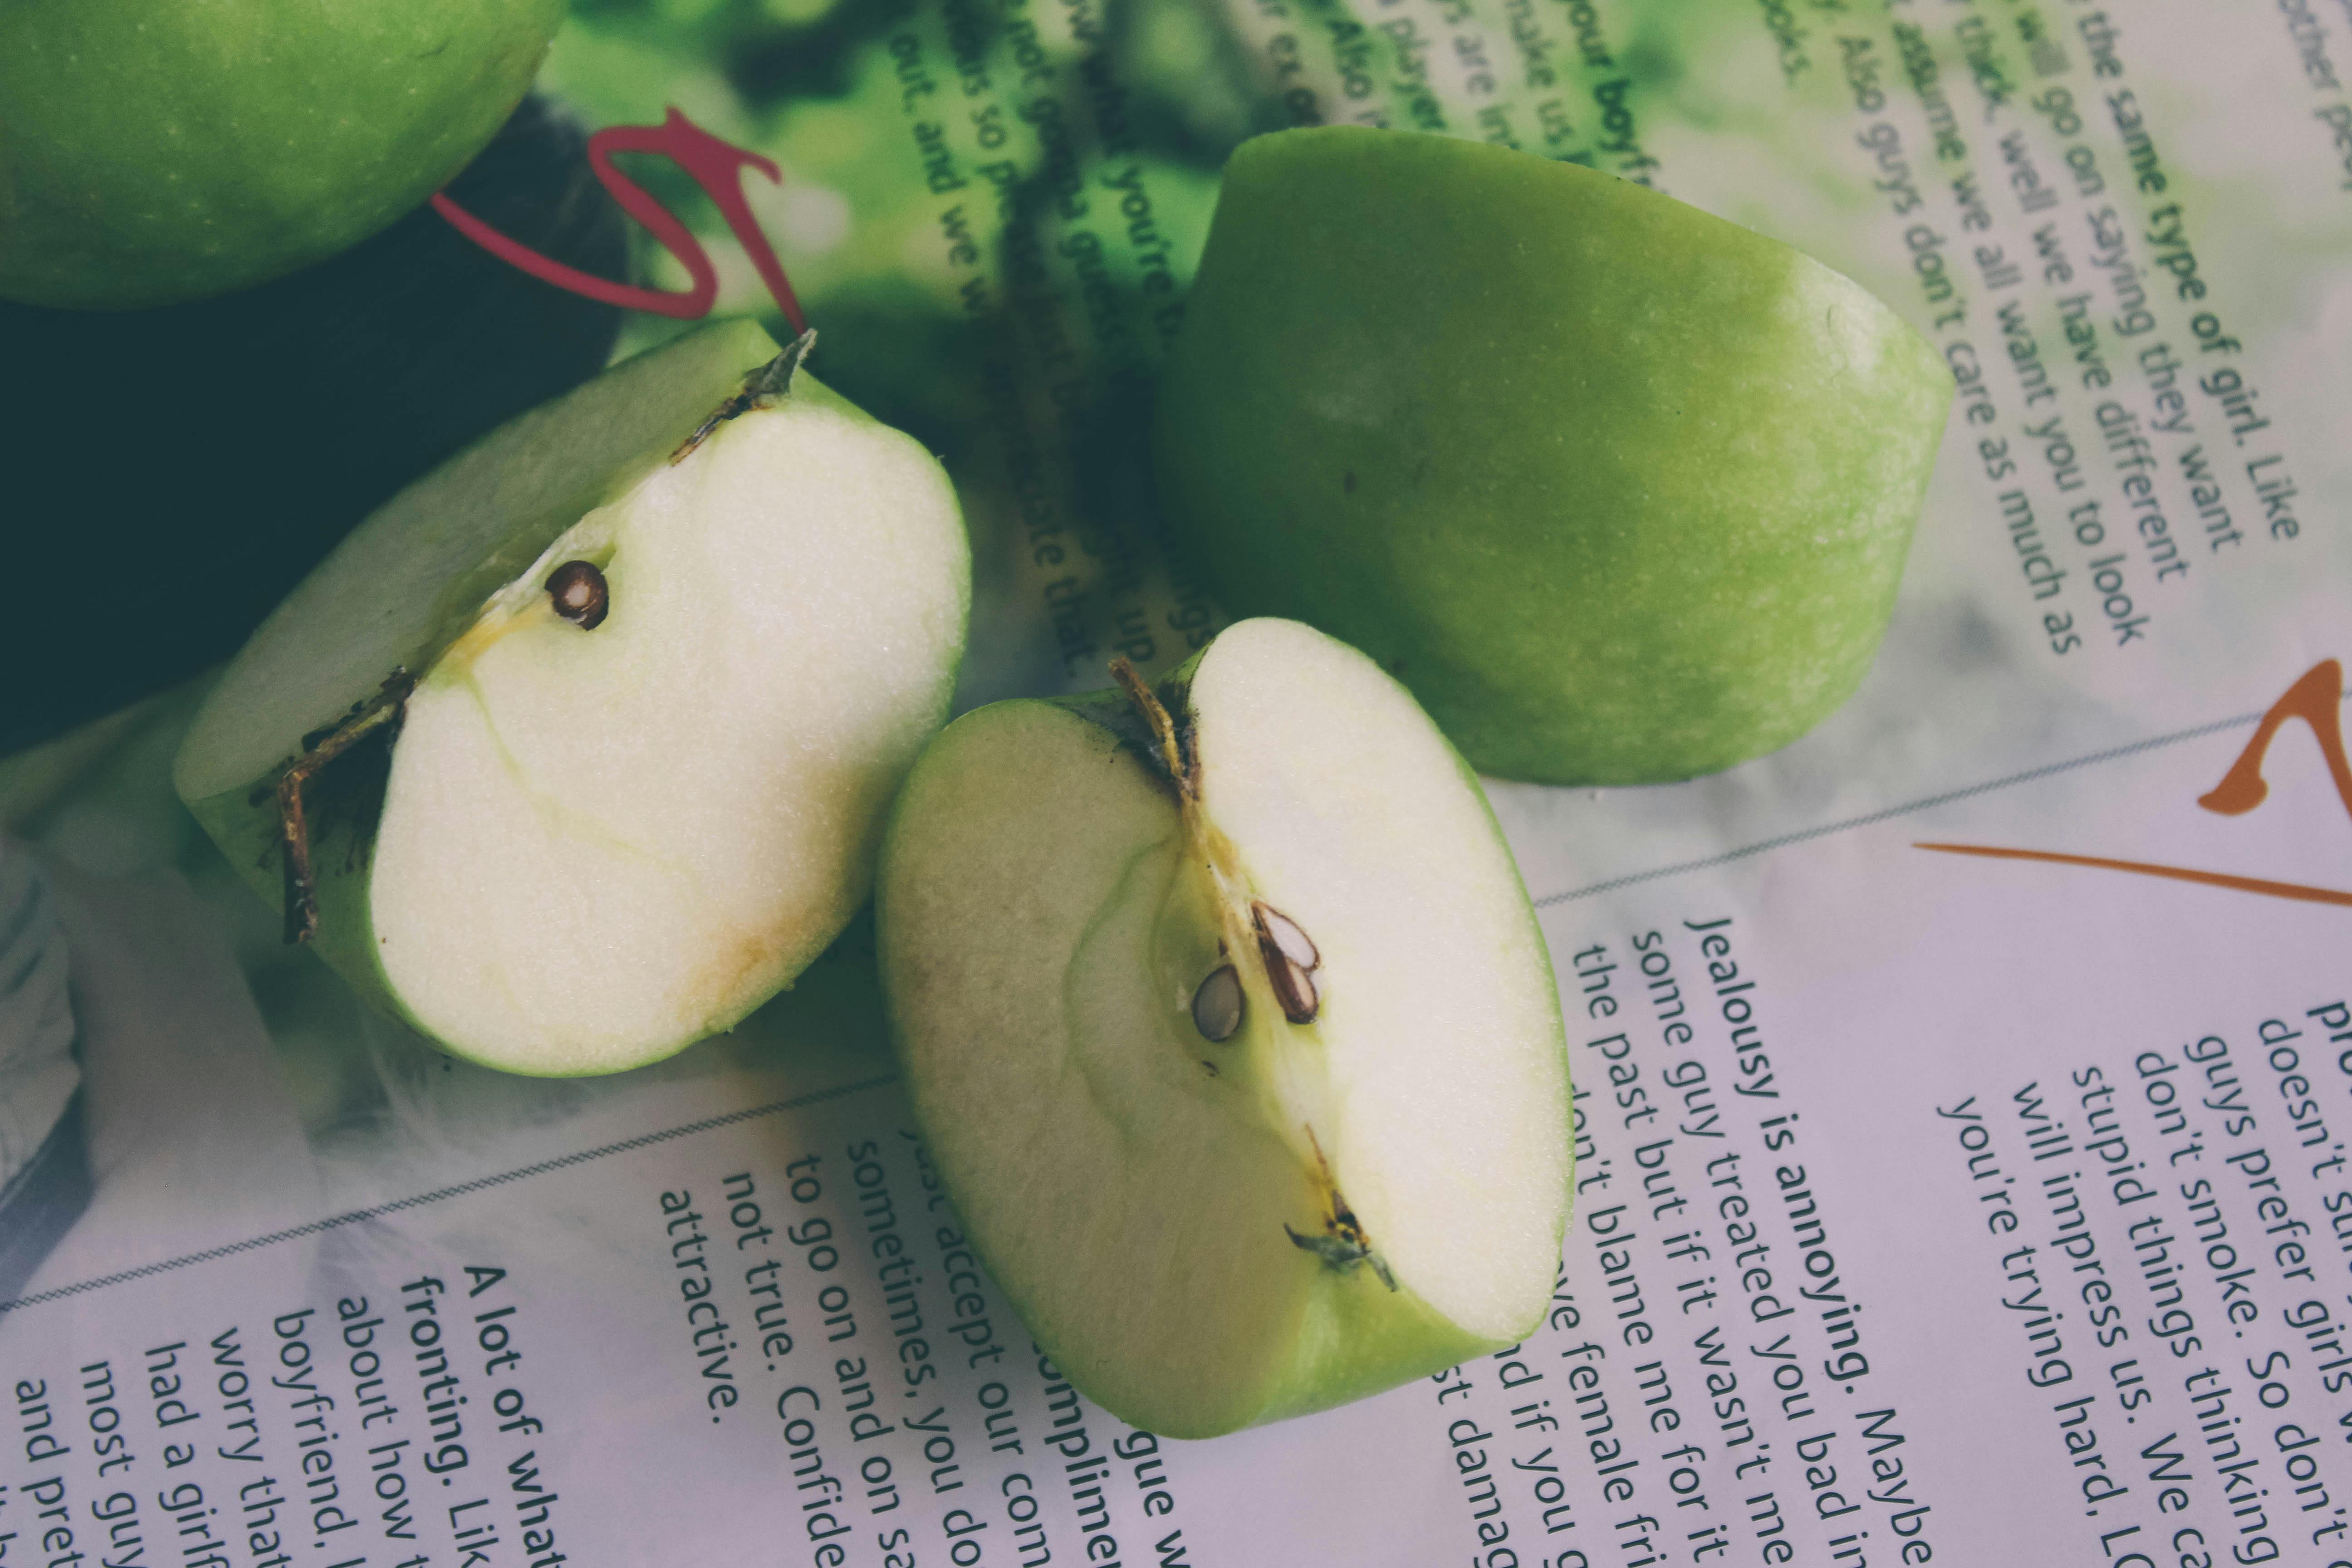 Free stock photo of green apples half cut